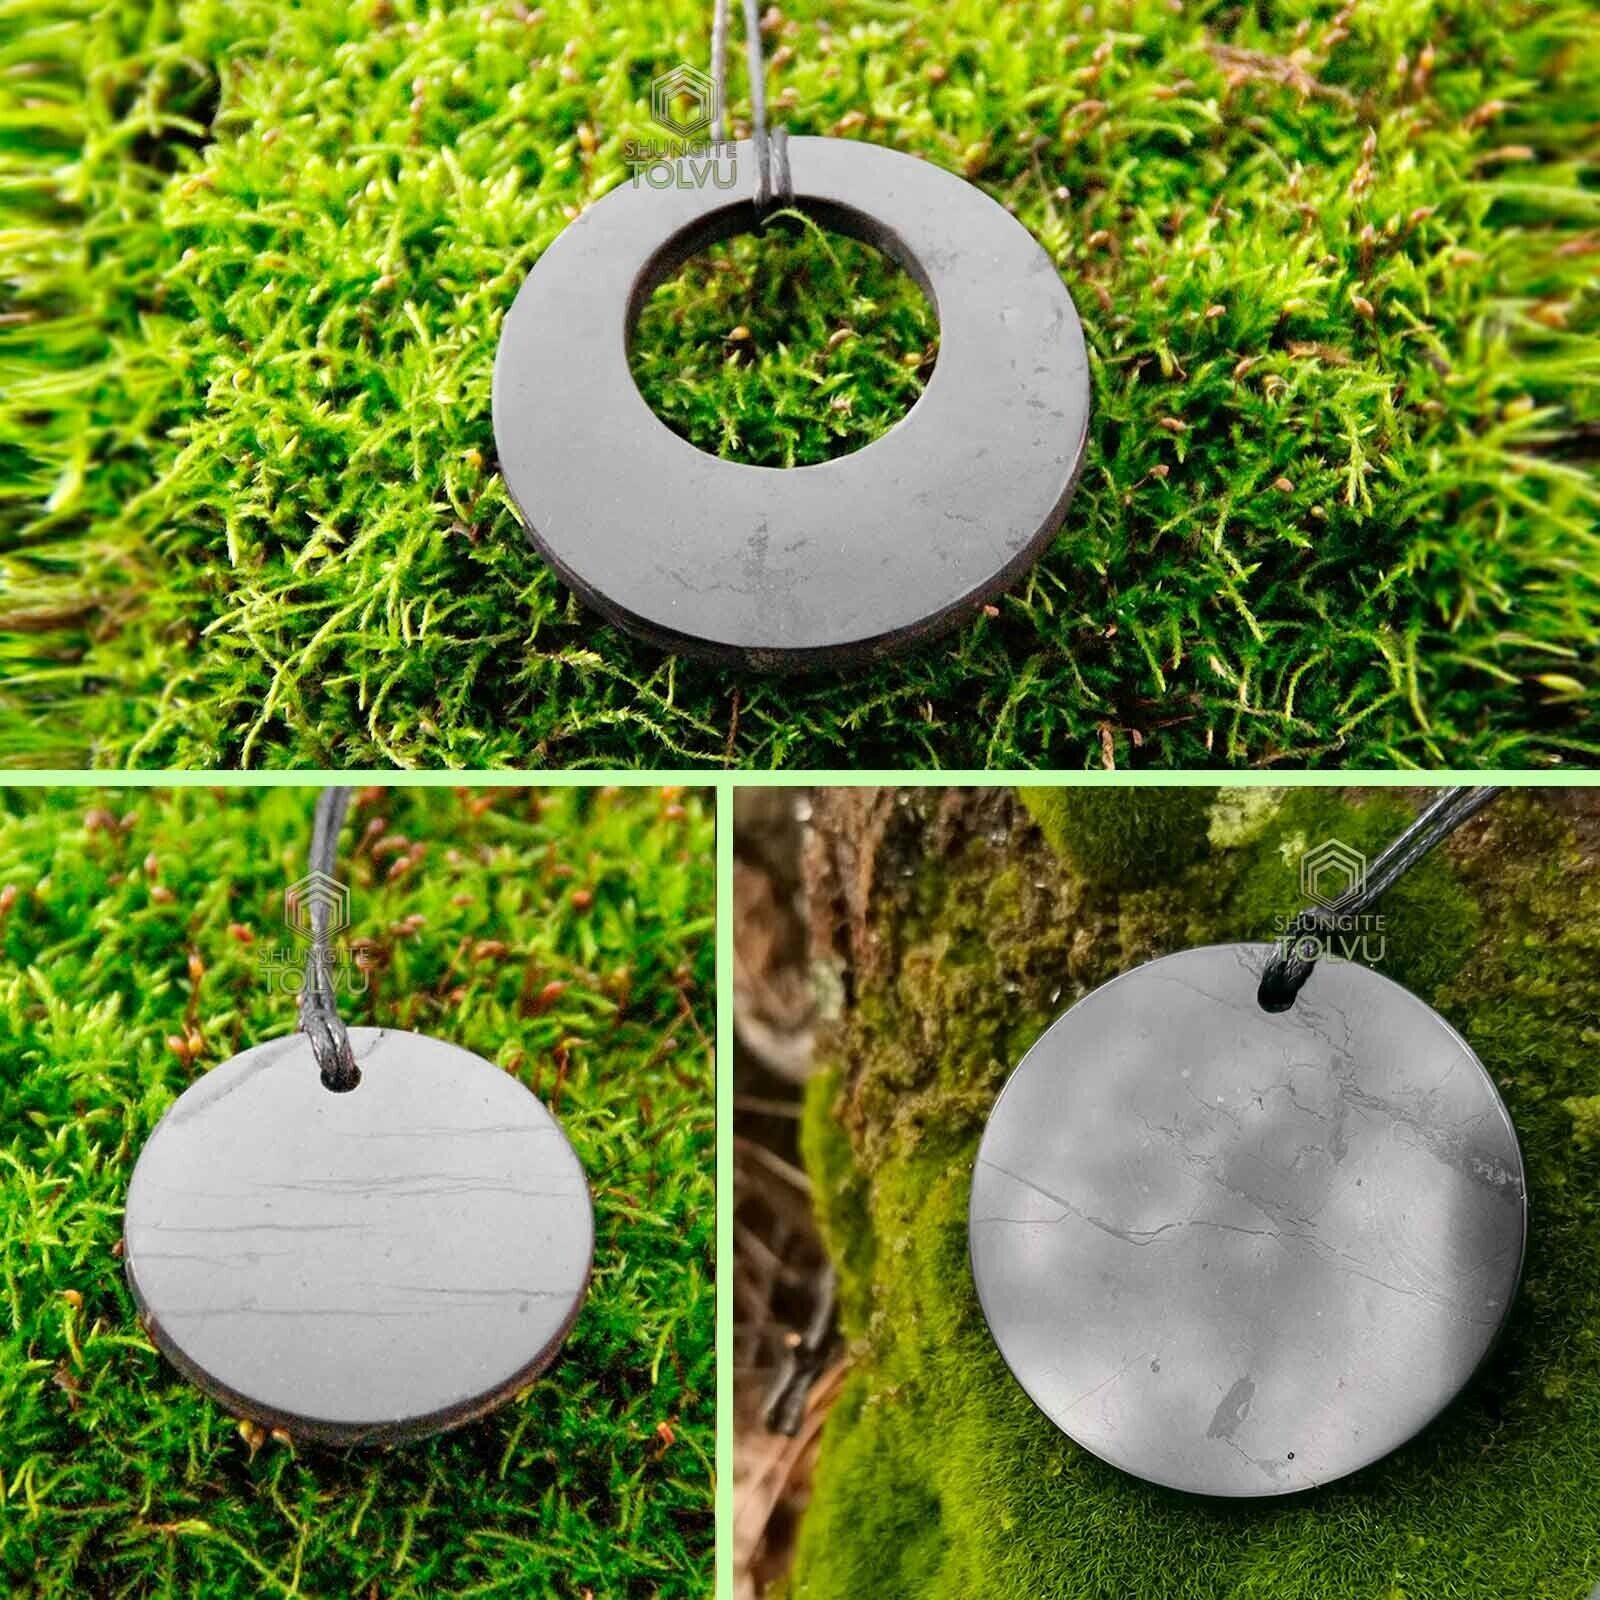 3x Set Shungite pendants - 3 Pieces - Authentic Shungite stone necklace, Tolvu